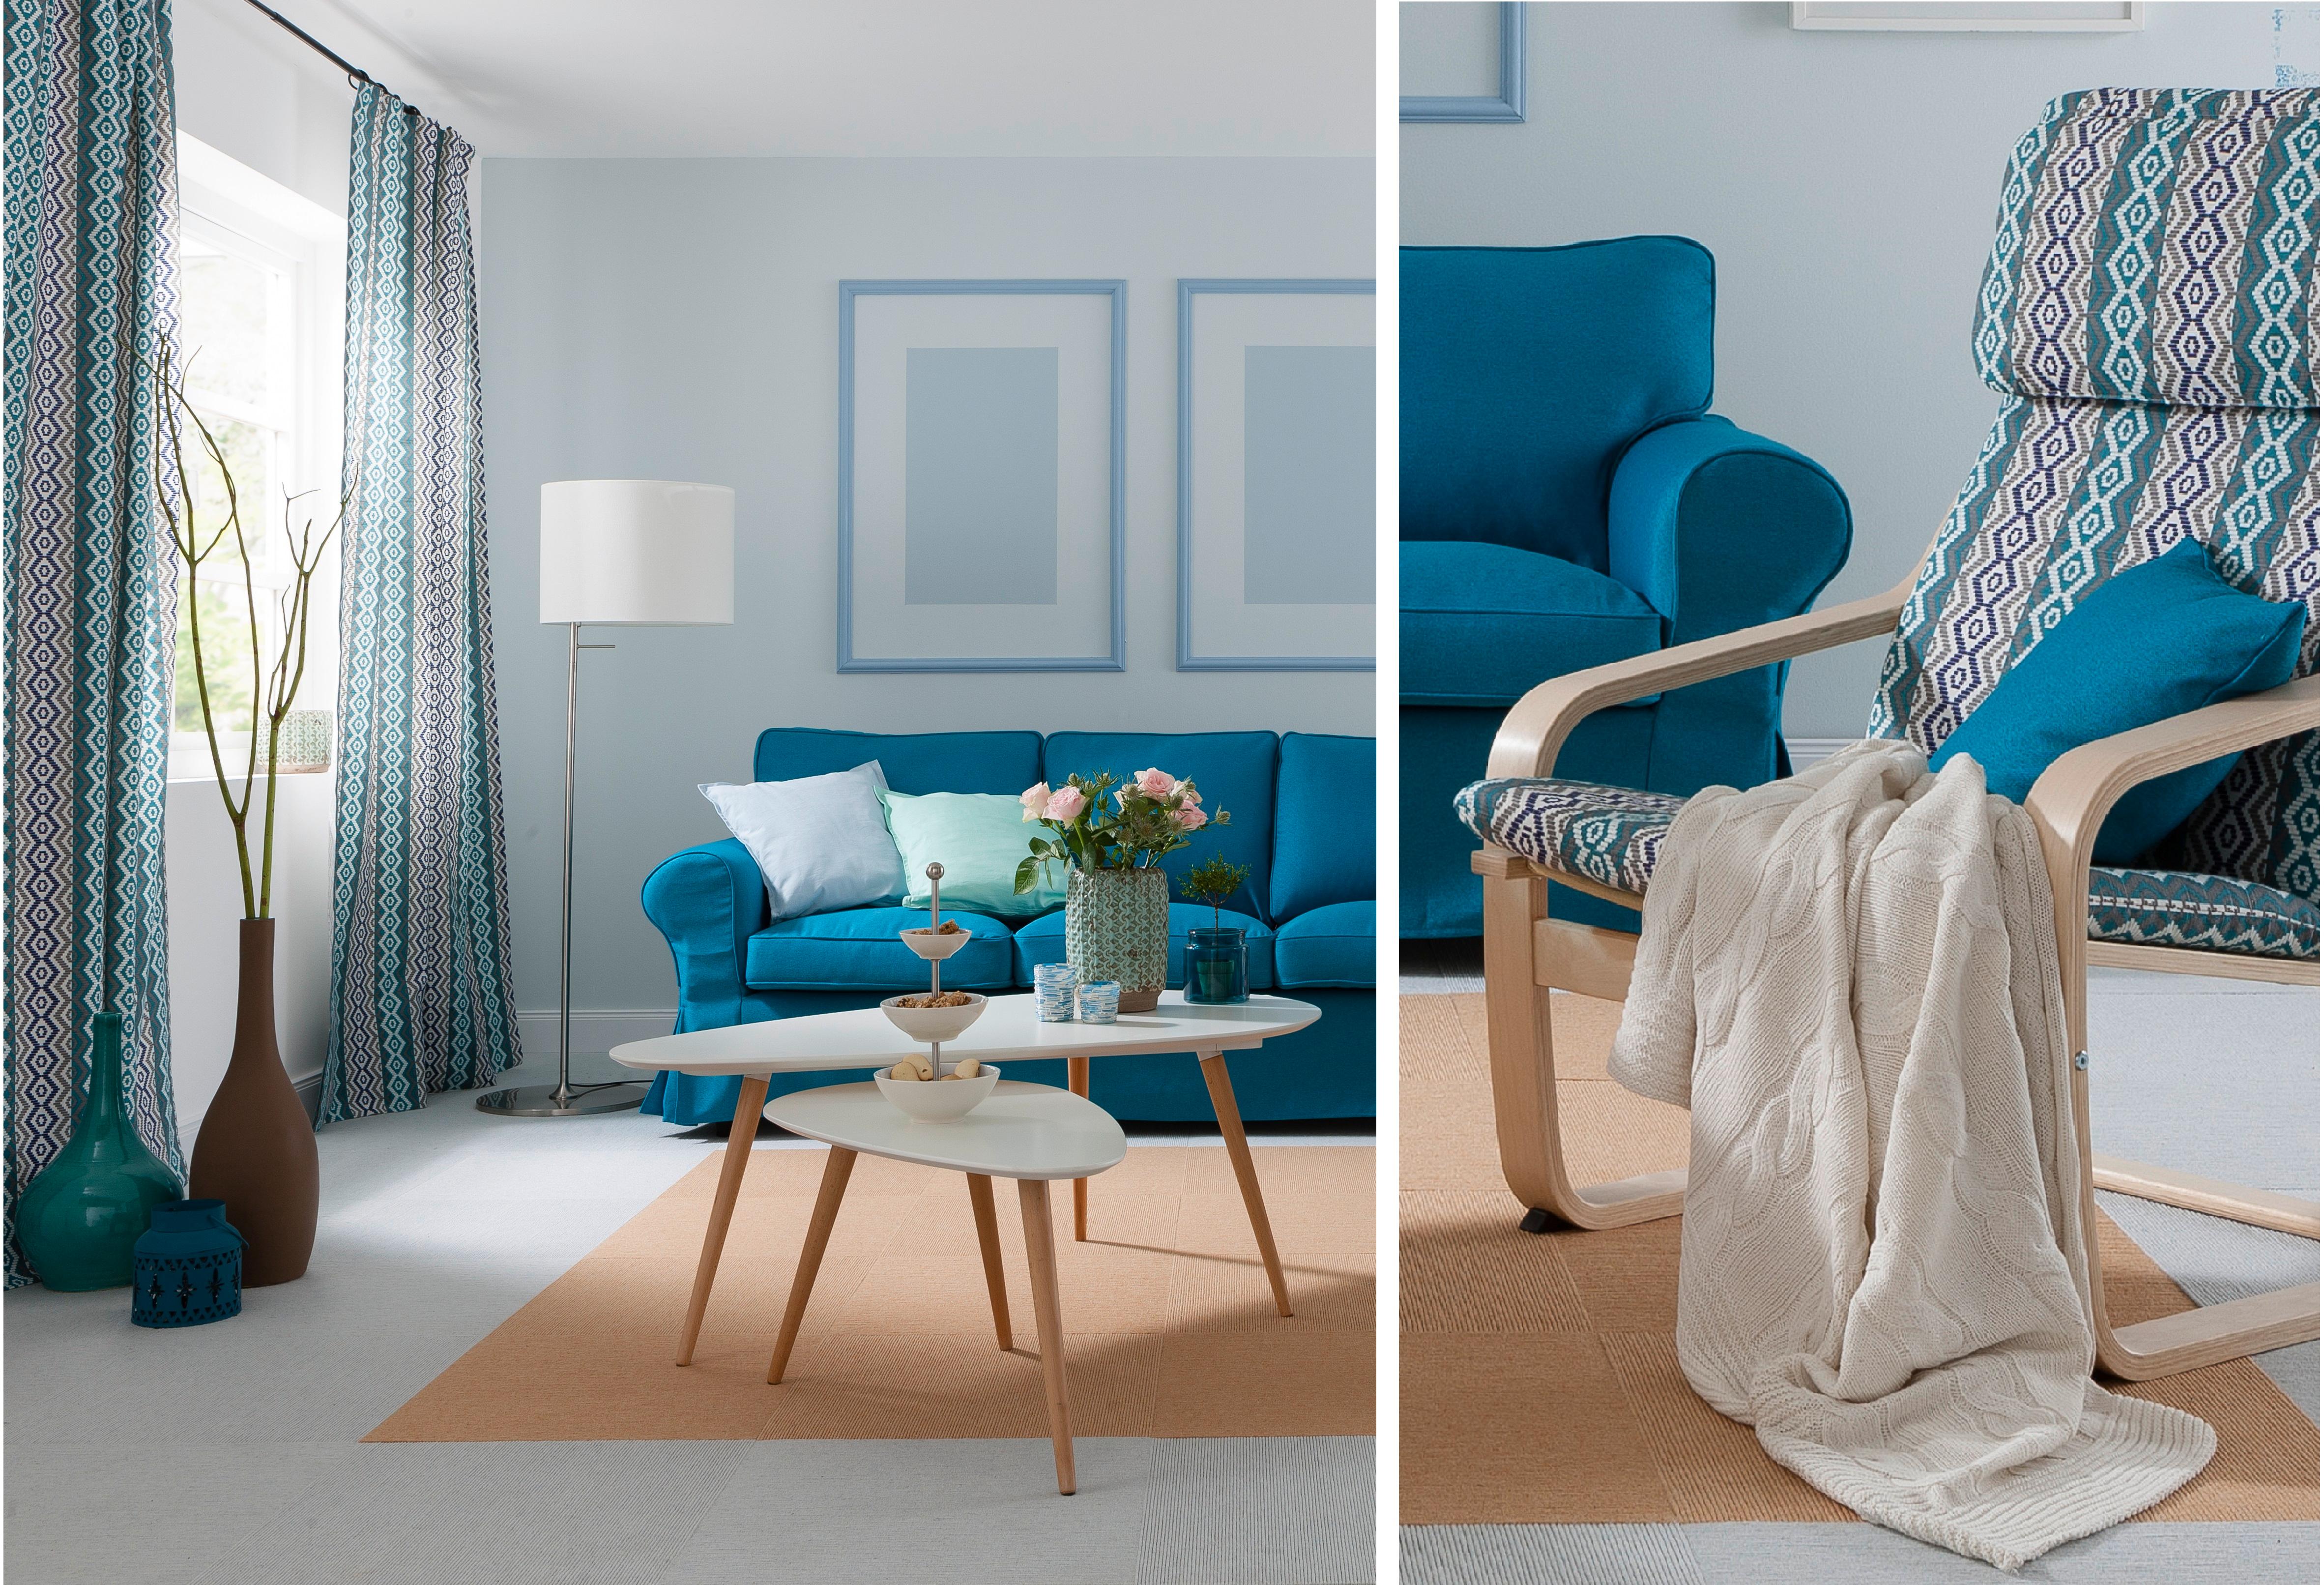 Blaues Sofa #stuhl #sessel #kissen #vorhang #ikea ©Saustark Design GmbH